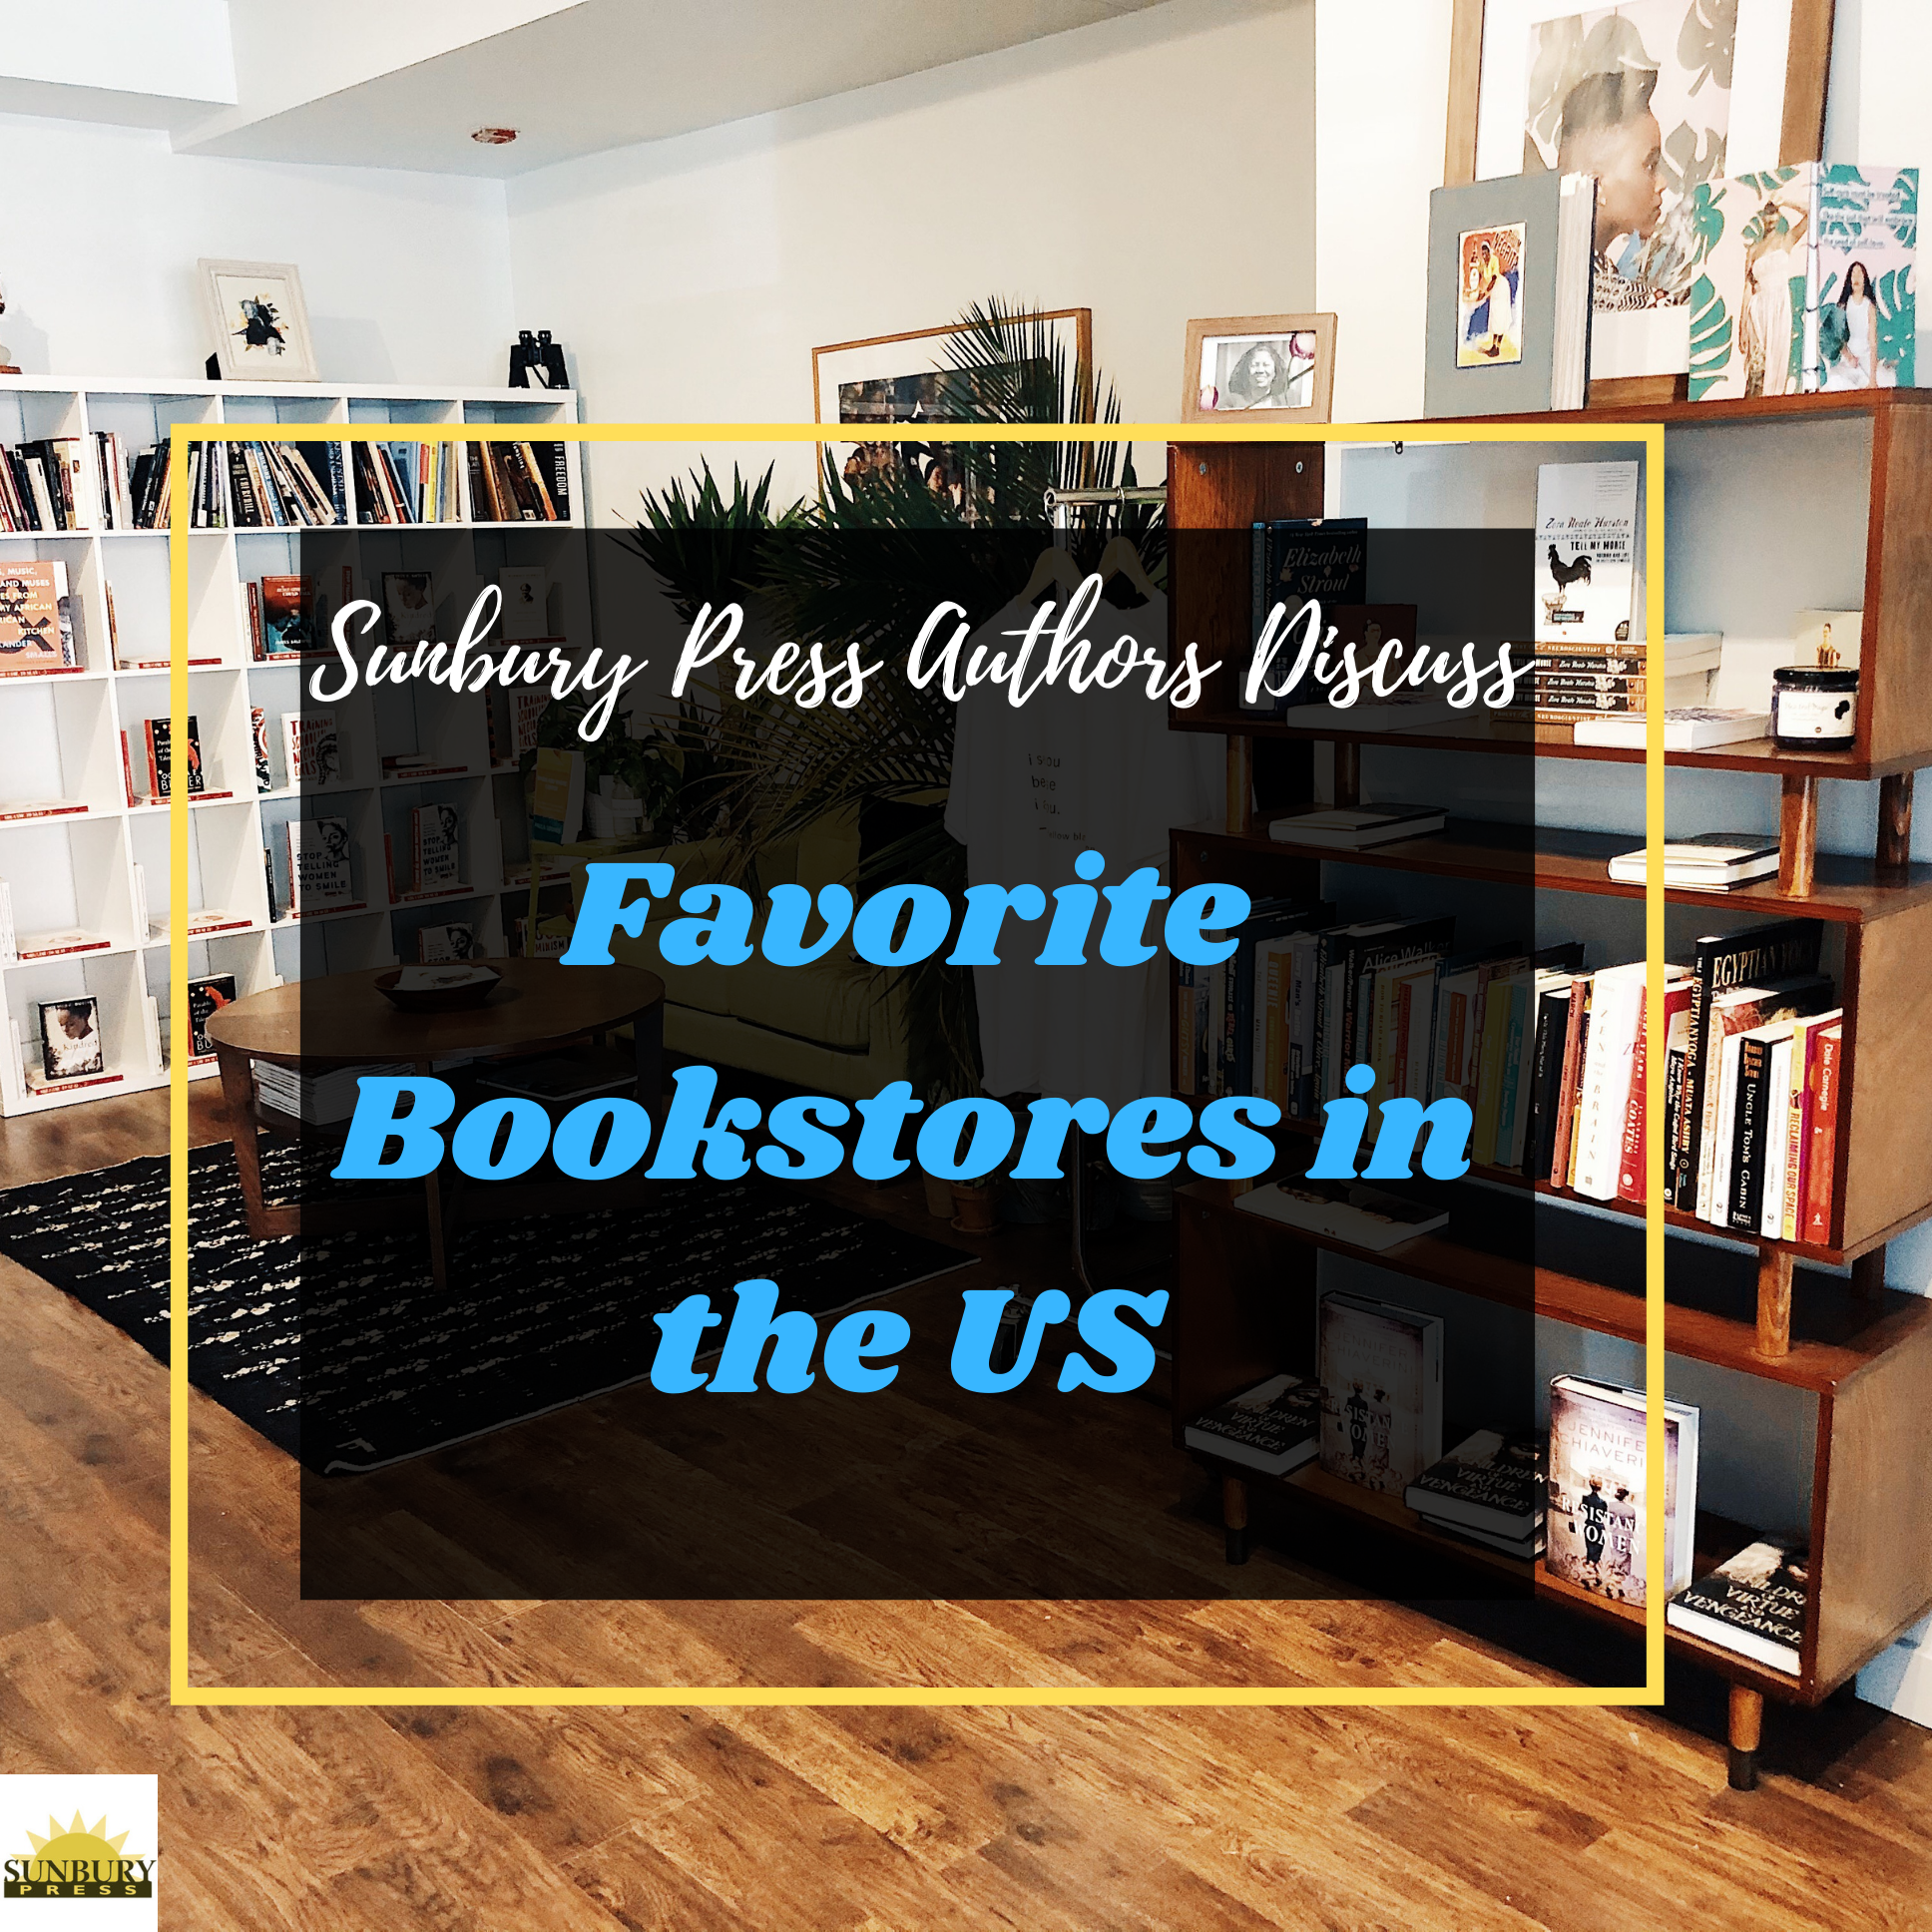 Sunbury Authors Discuss Their Favorite Bookstores in the US